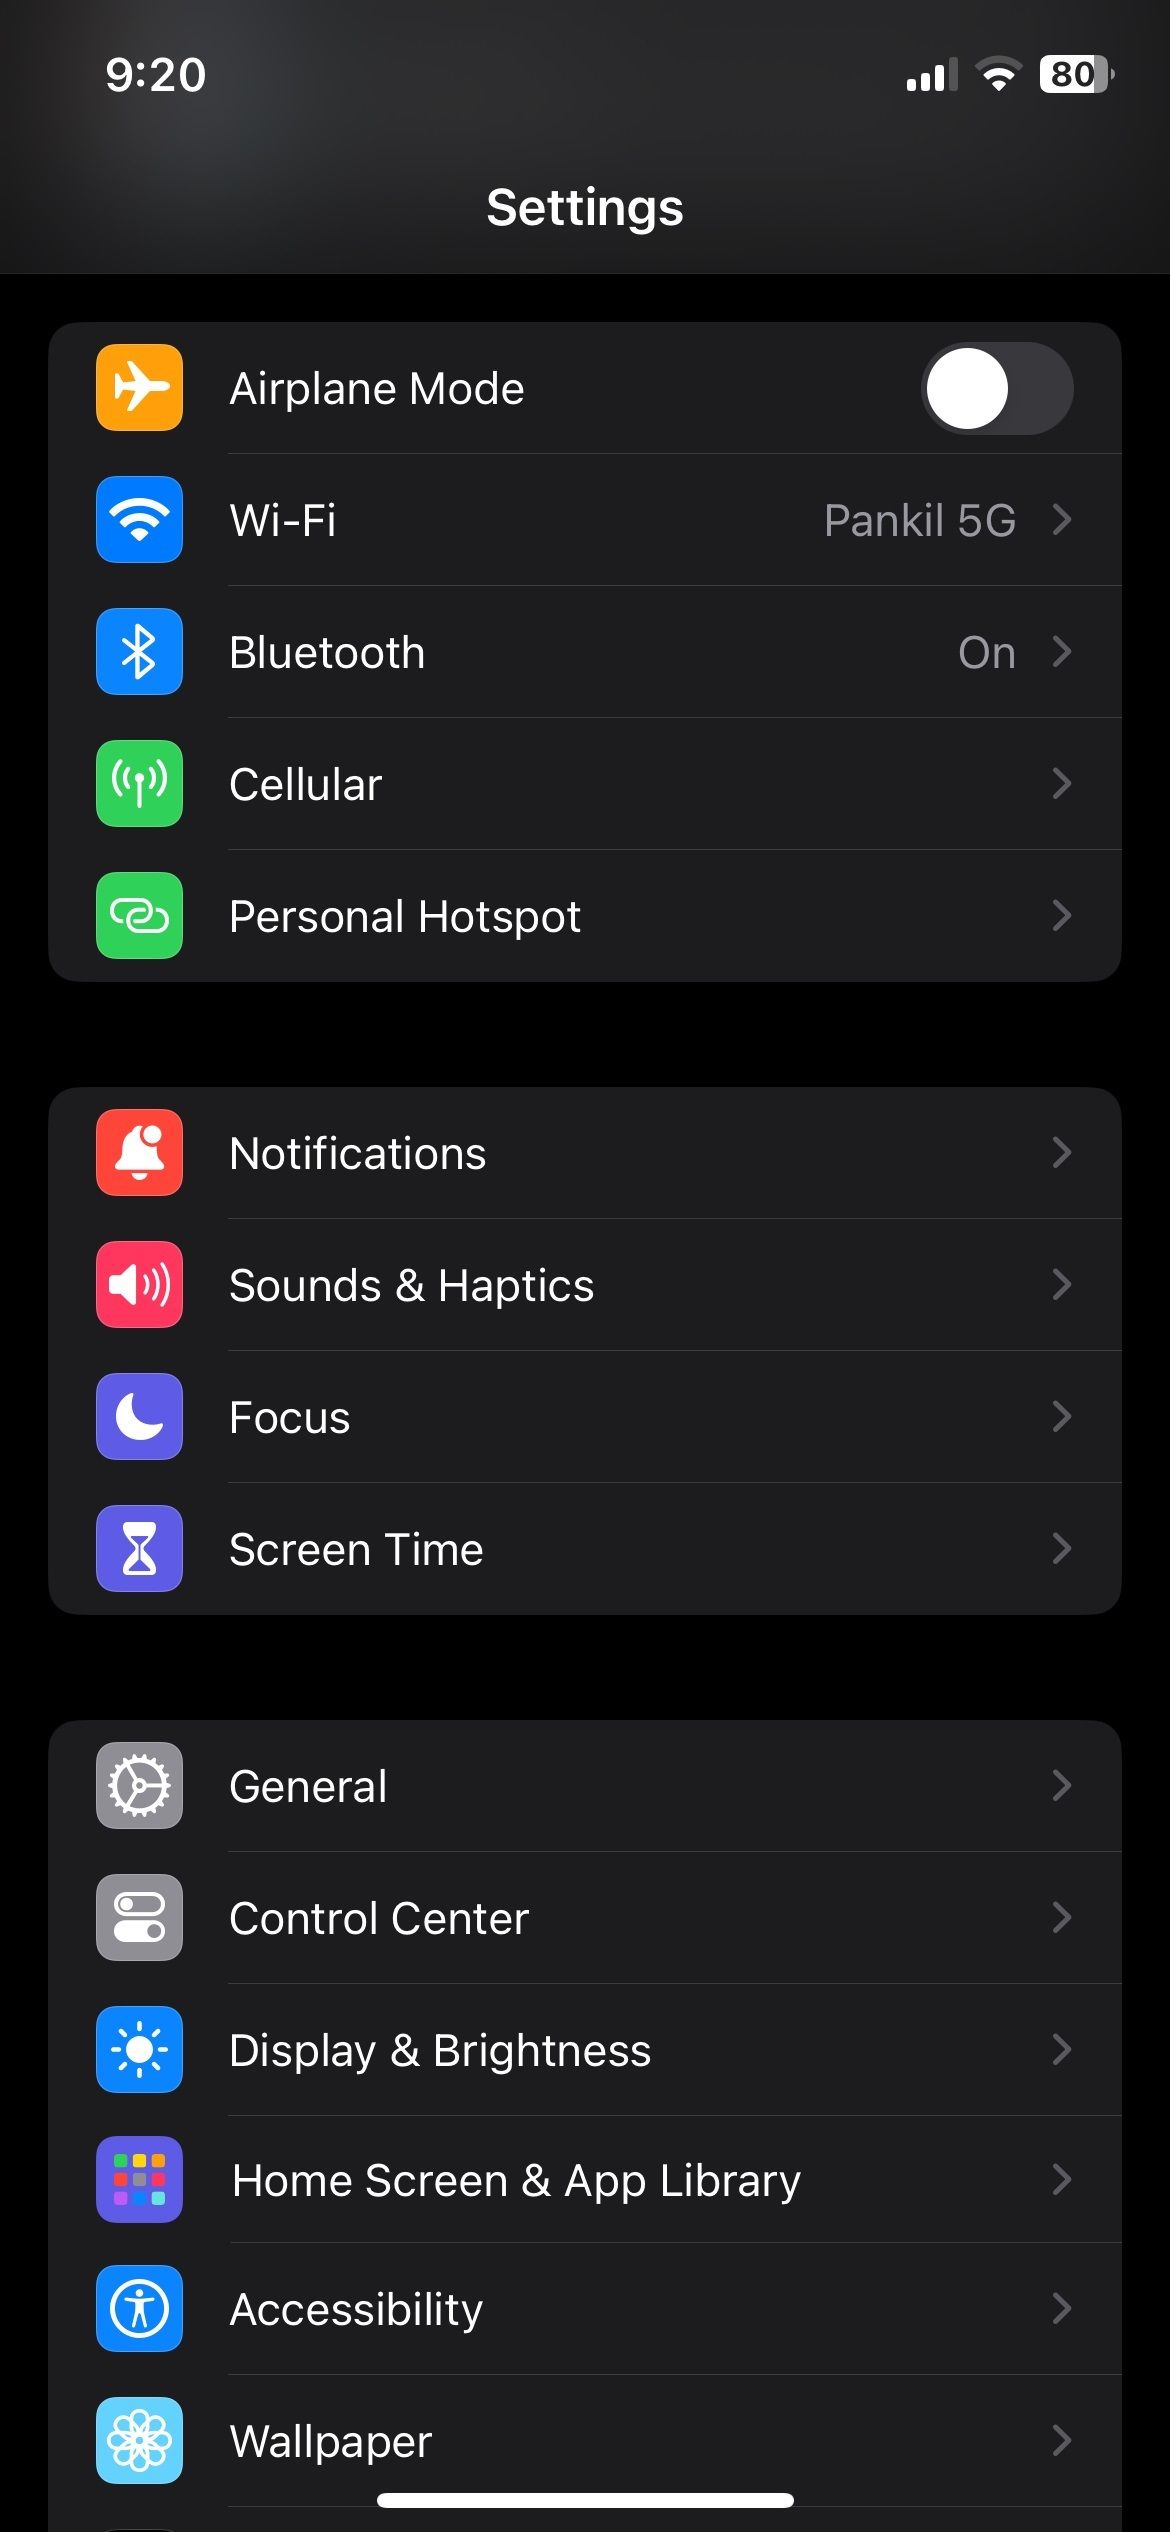 Settings App on iPhone-1